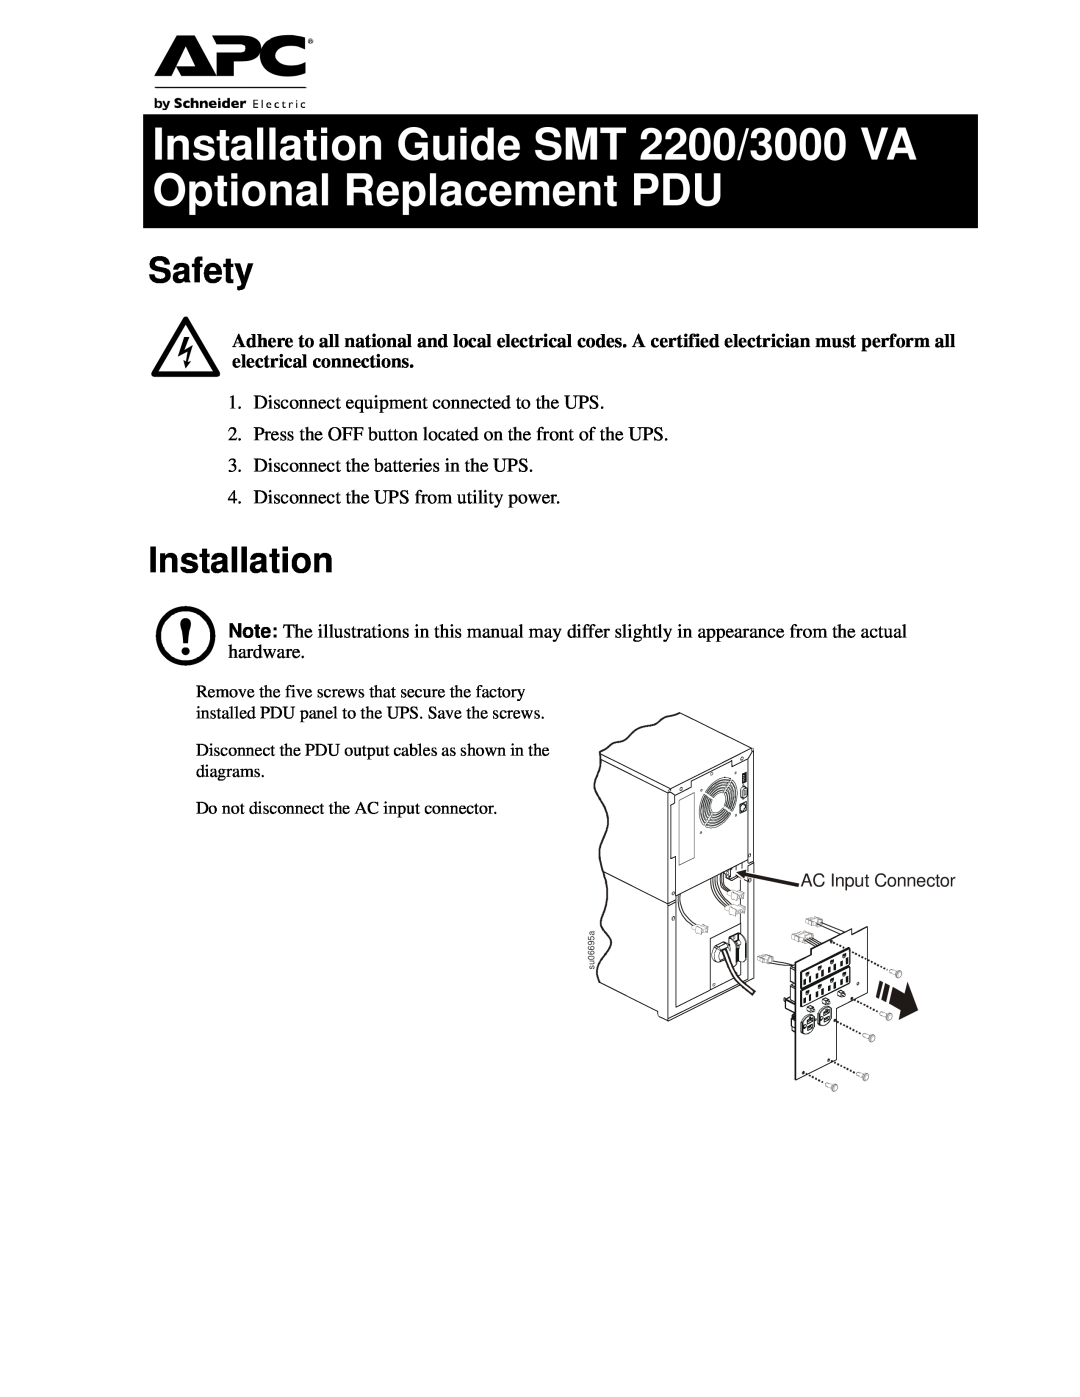 APC user manual APC Smart-UPS, User Manual, 1500/3000 VA 120/230 Vac Modular Uninterruptible Power Supply, English 